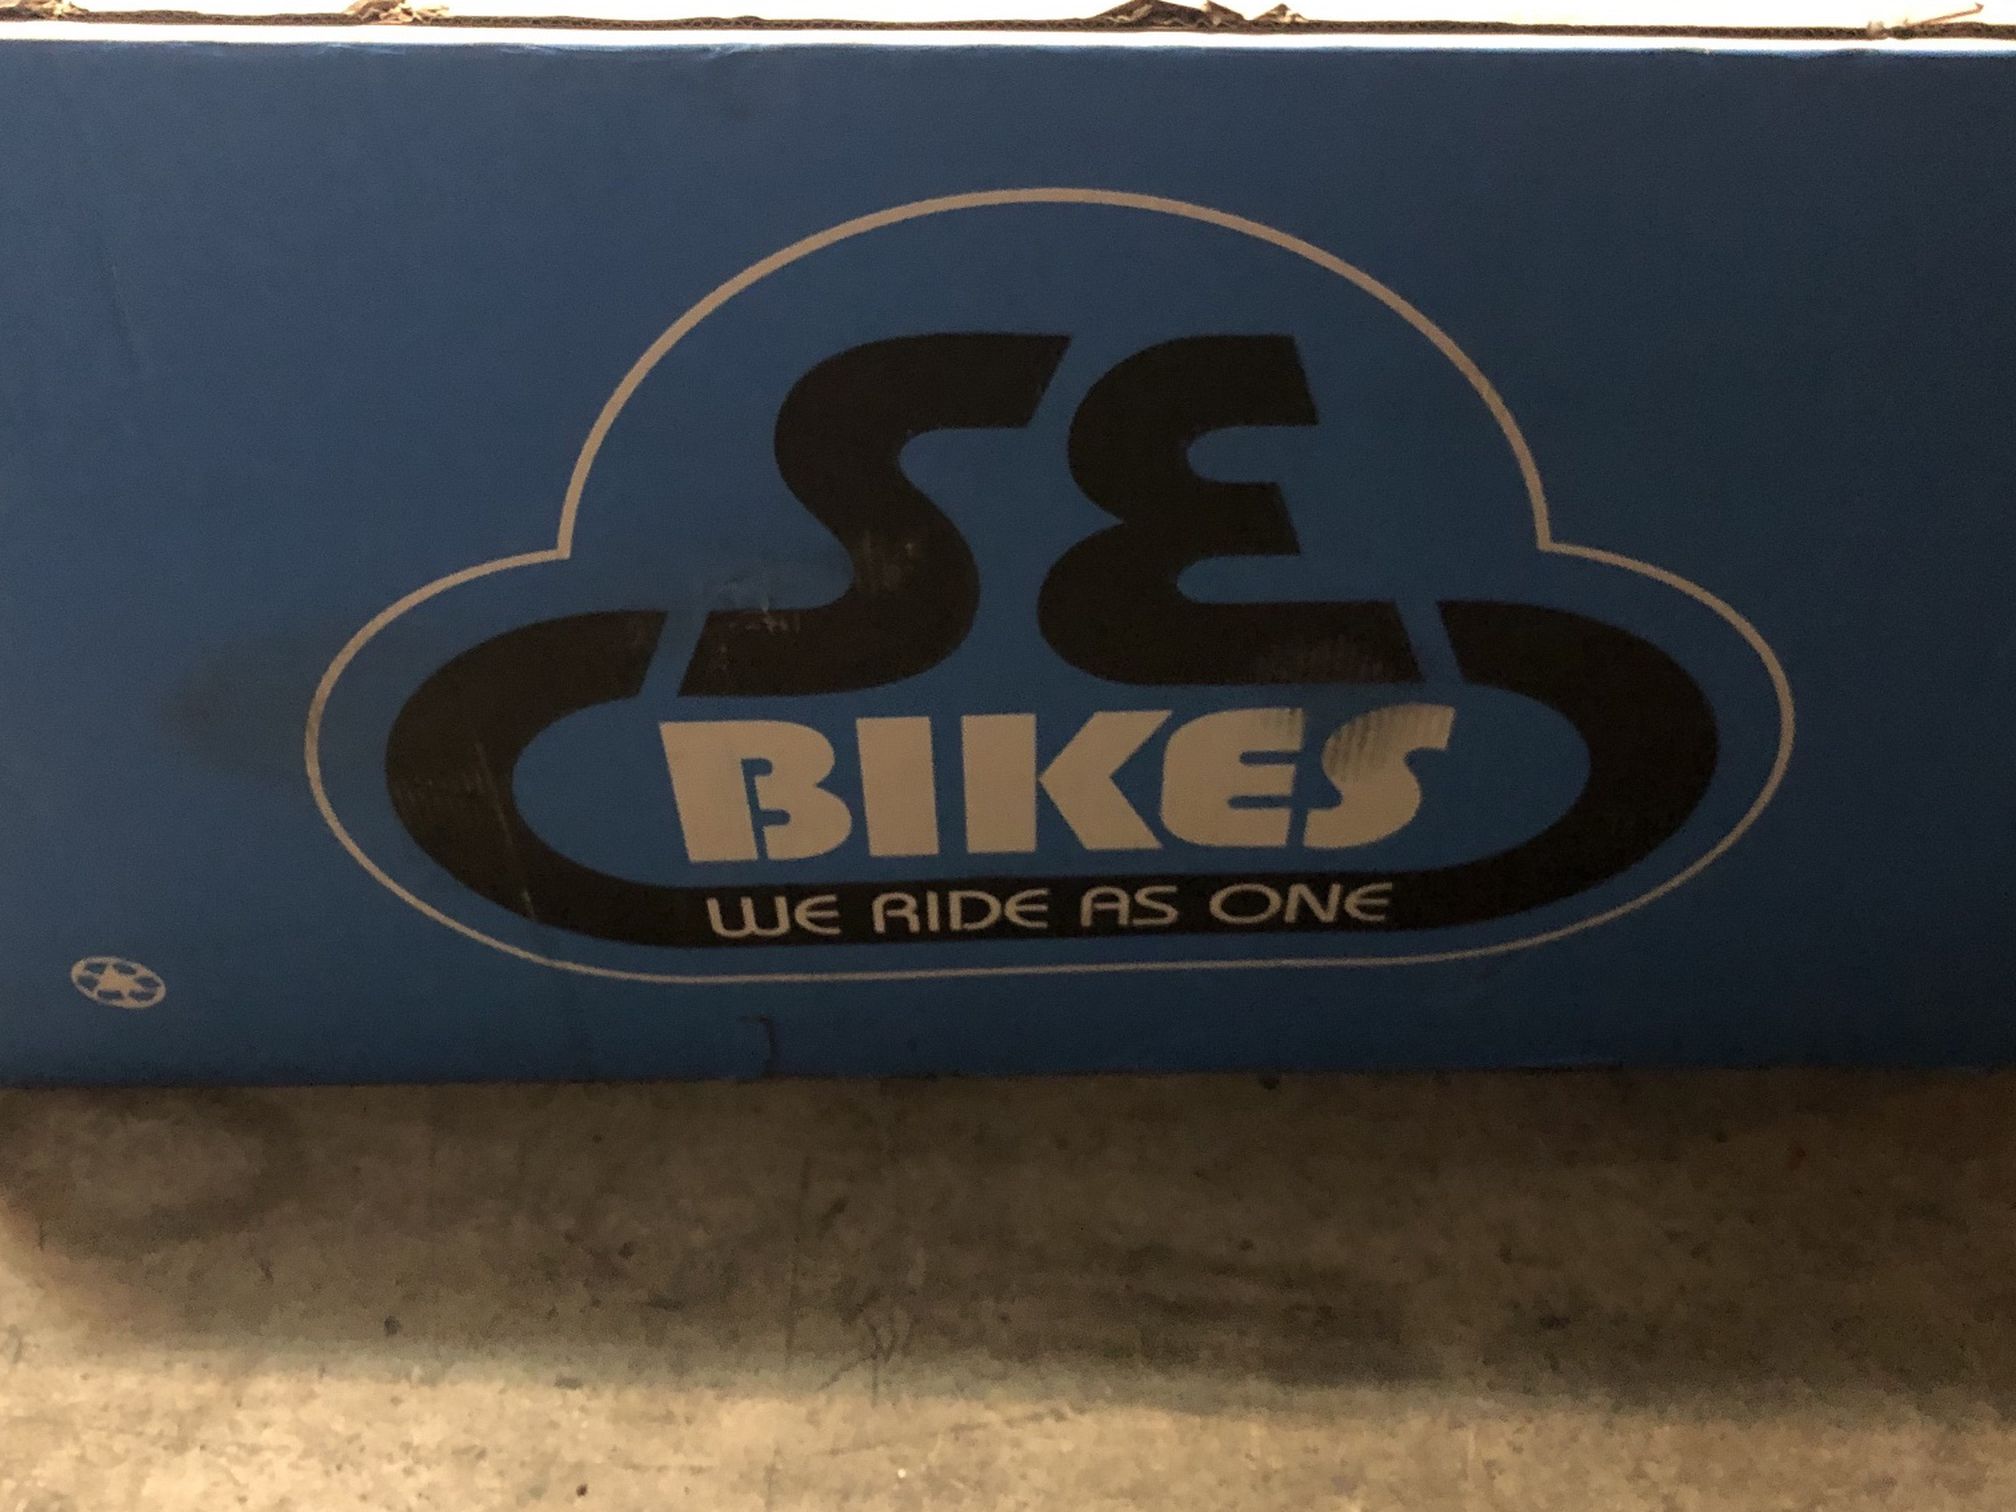 SE Bikes For Sale! All Perfect